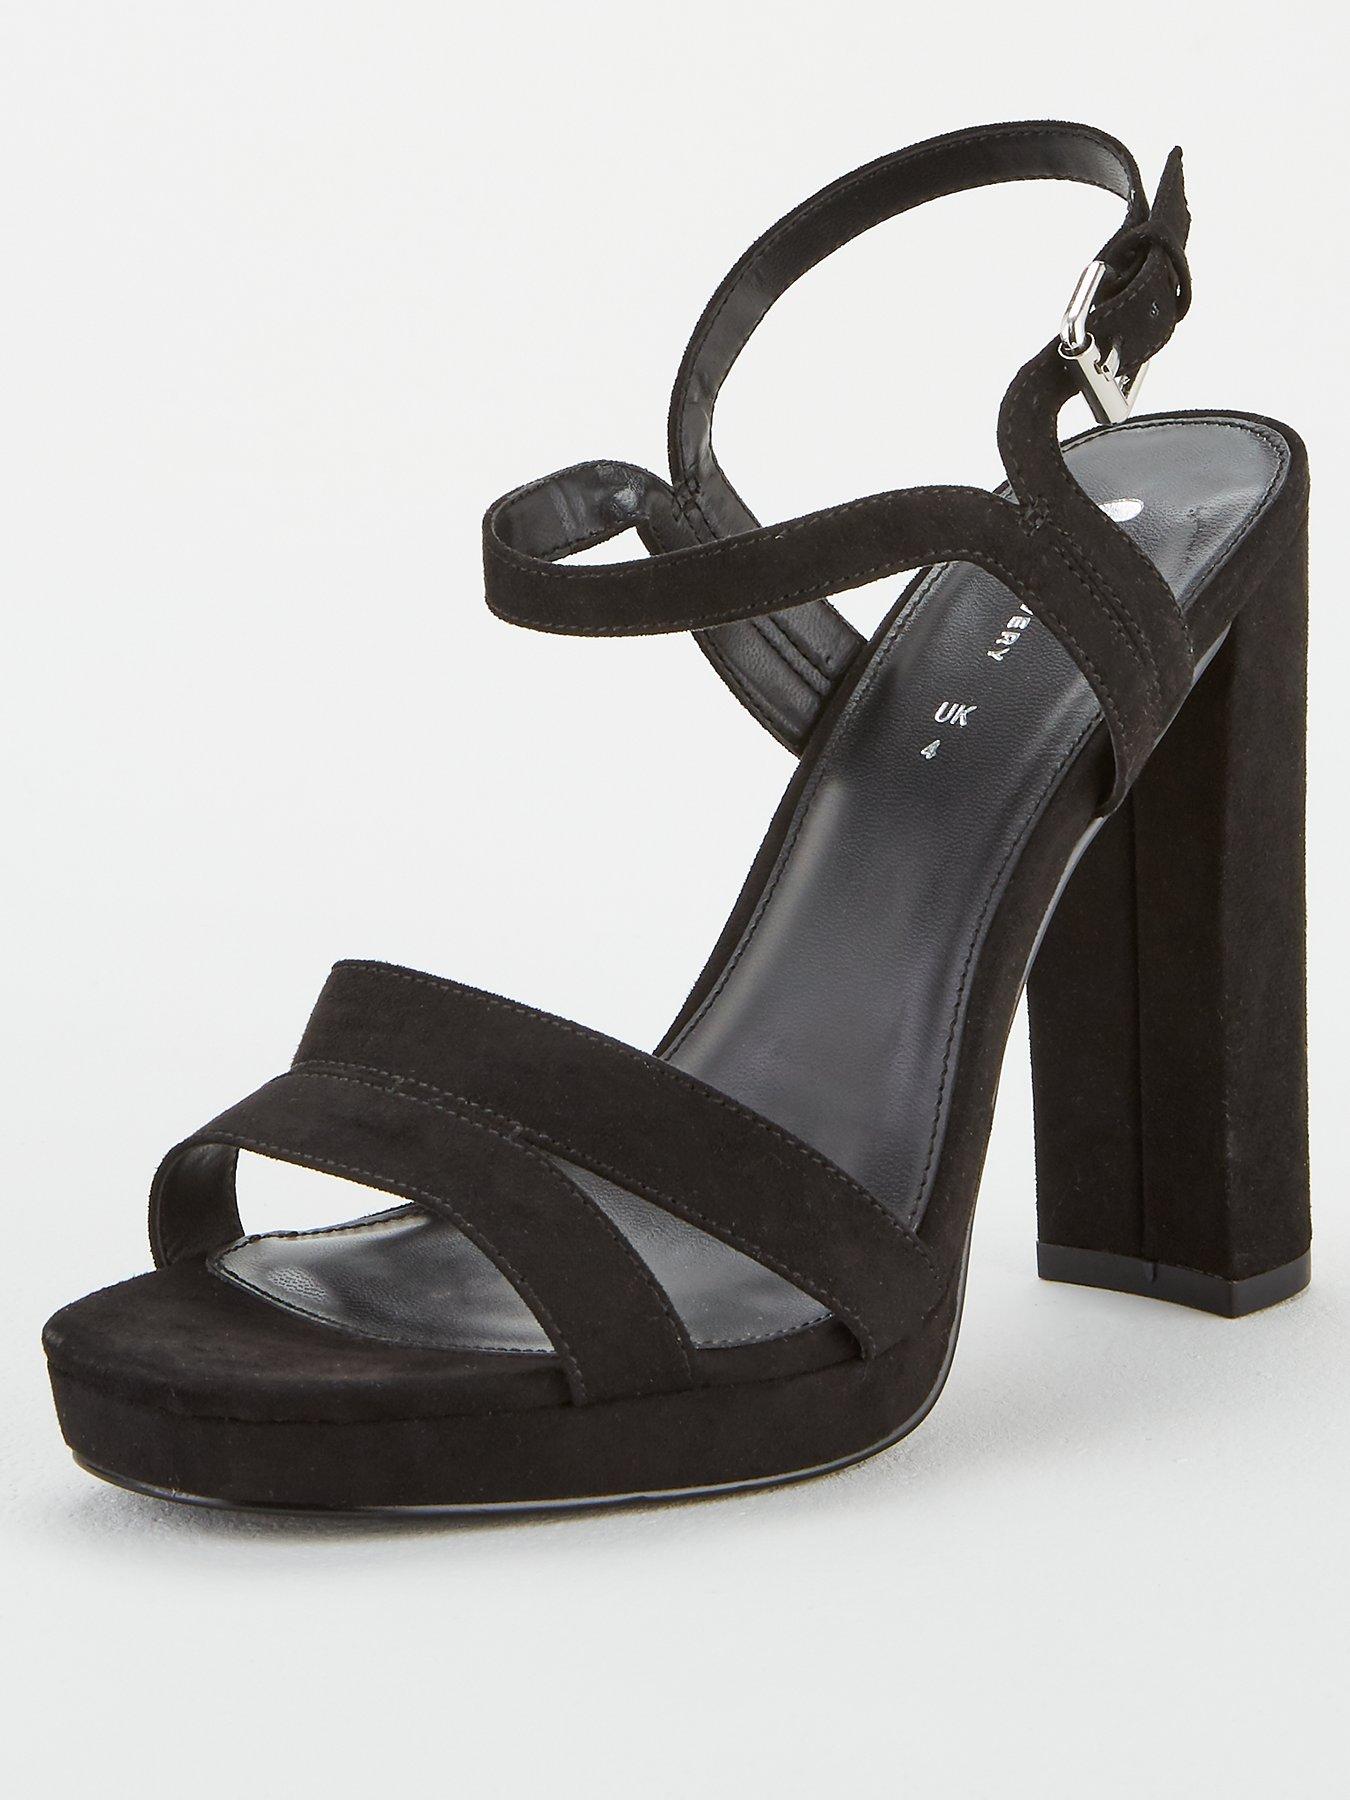 4.5 inch platform heels